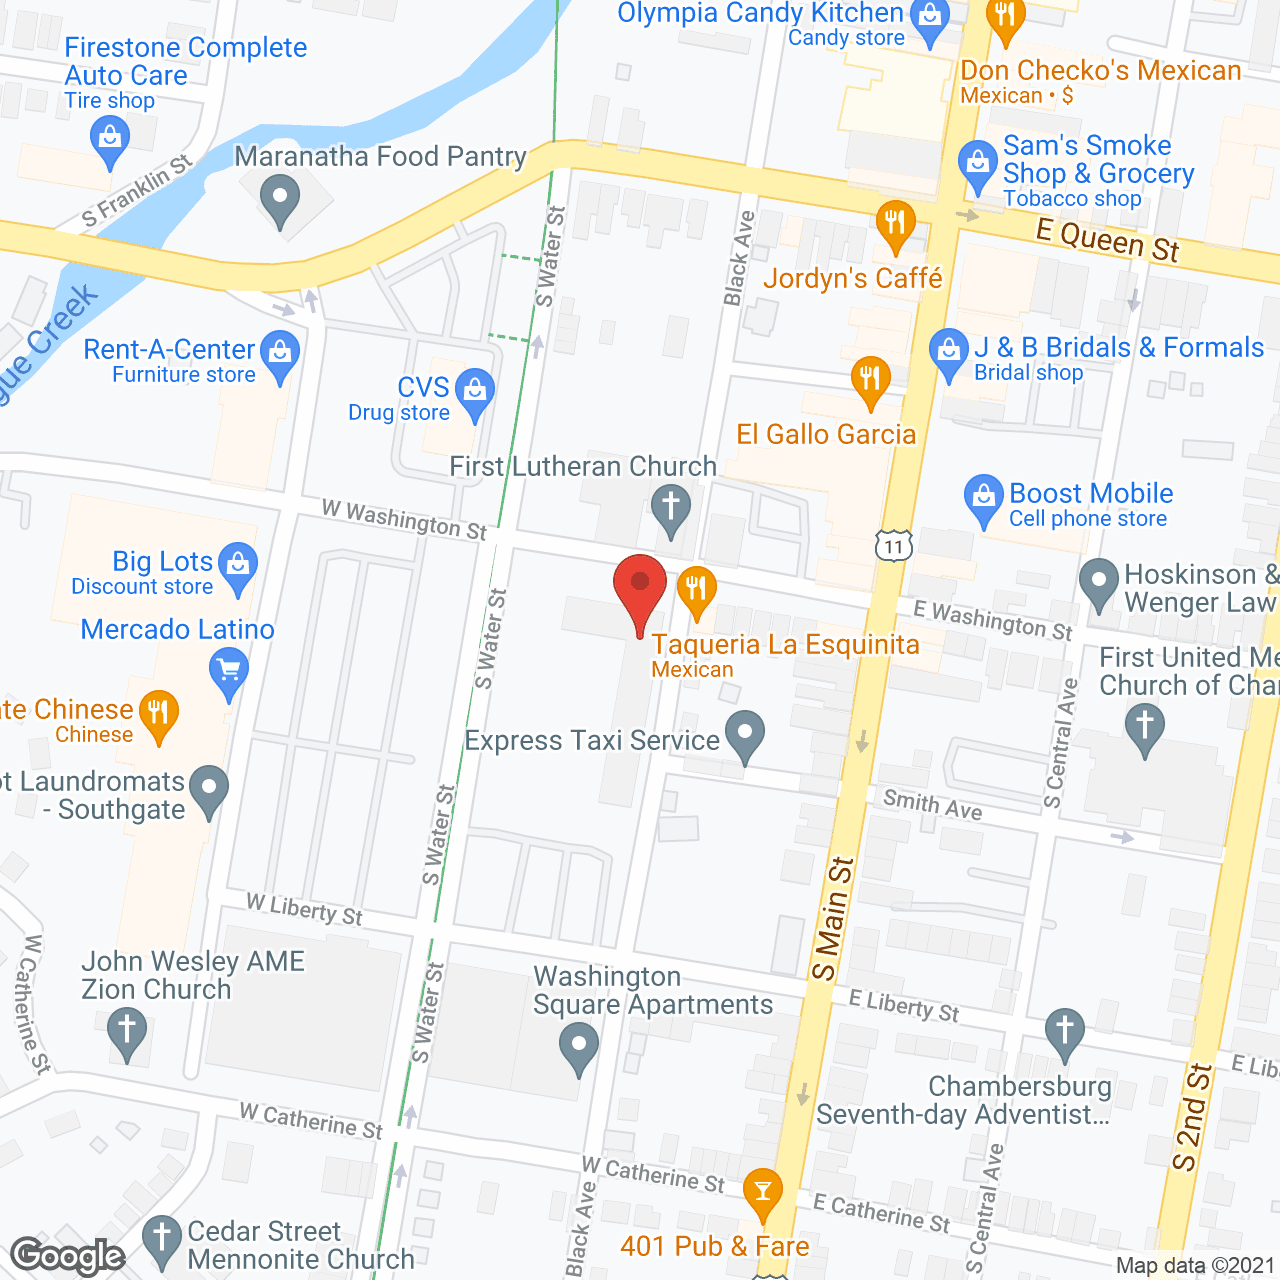 Washington Square in google map